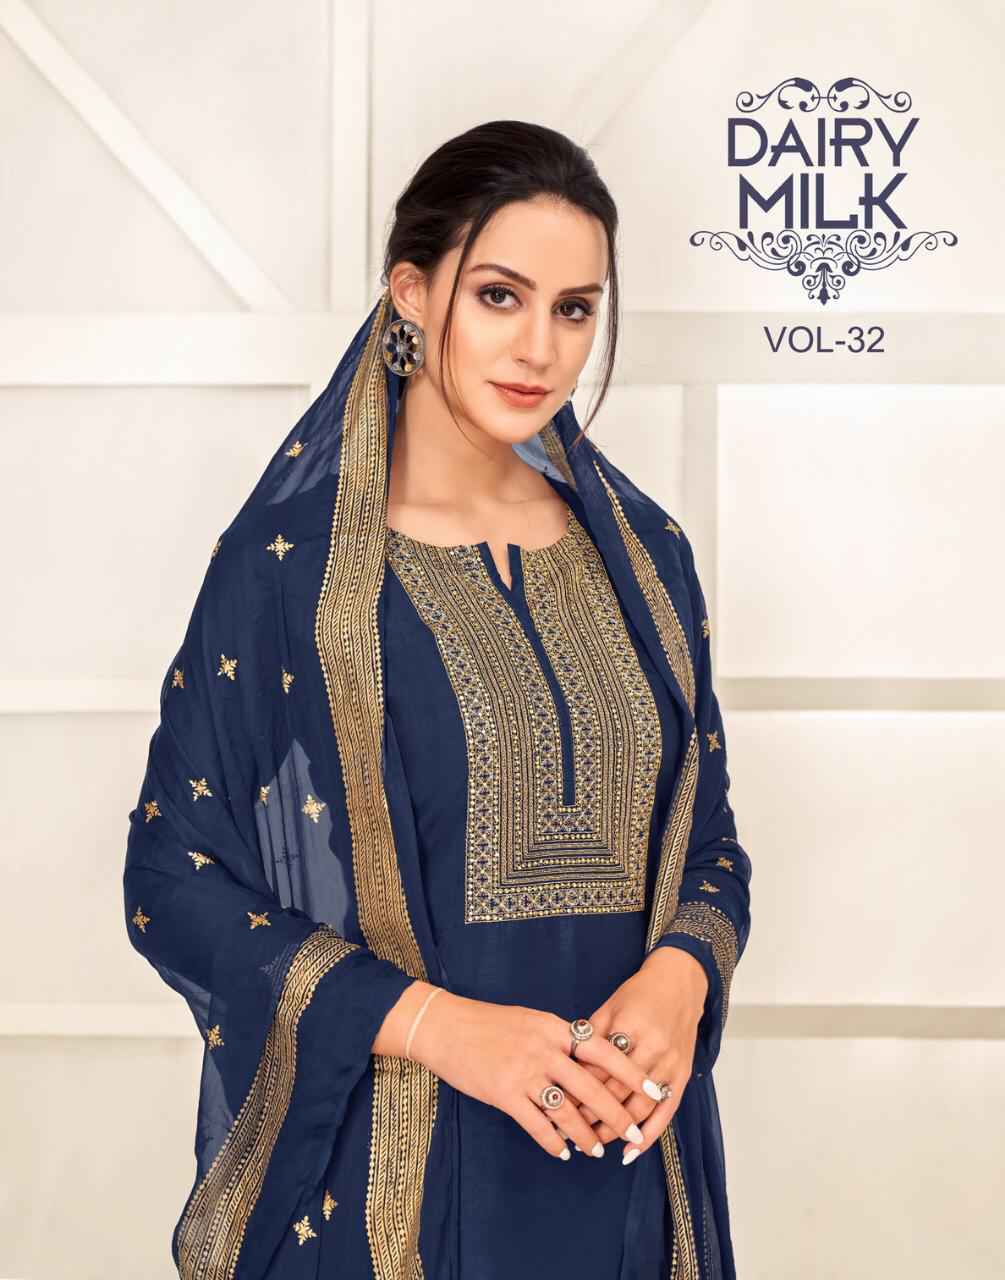 Angroop Plus Dairymilk Vol 32 Chanderi Cotton Suits Dealer